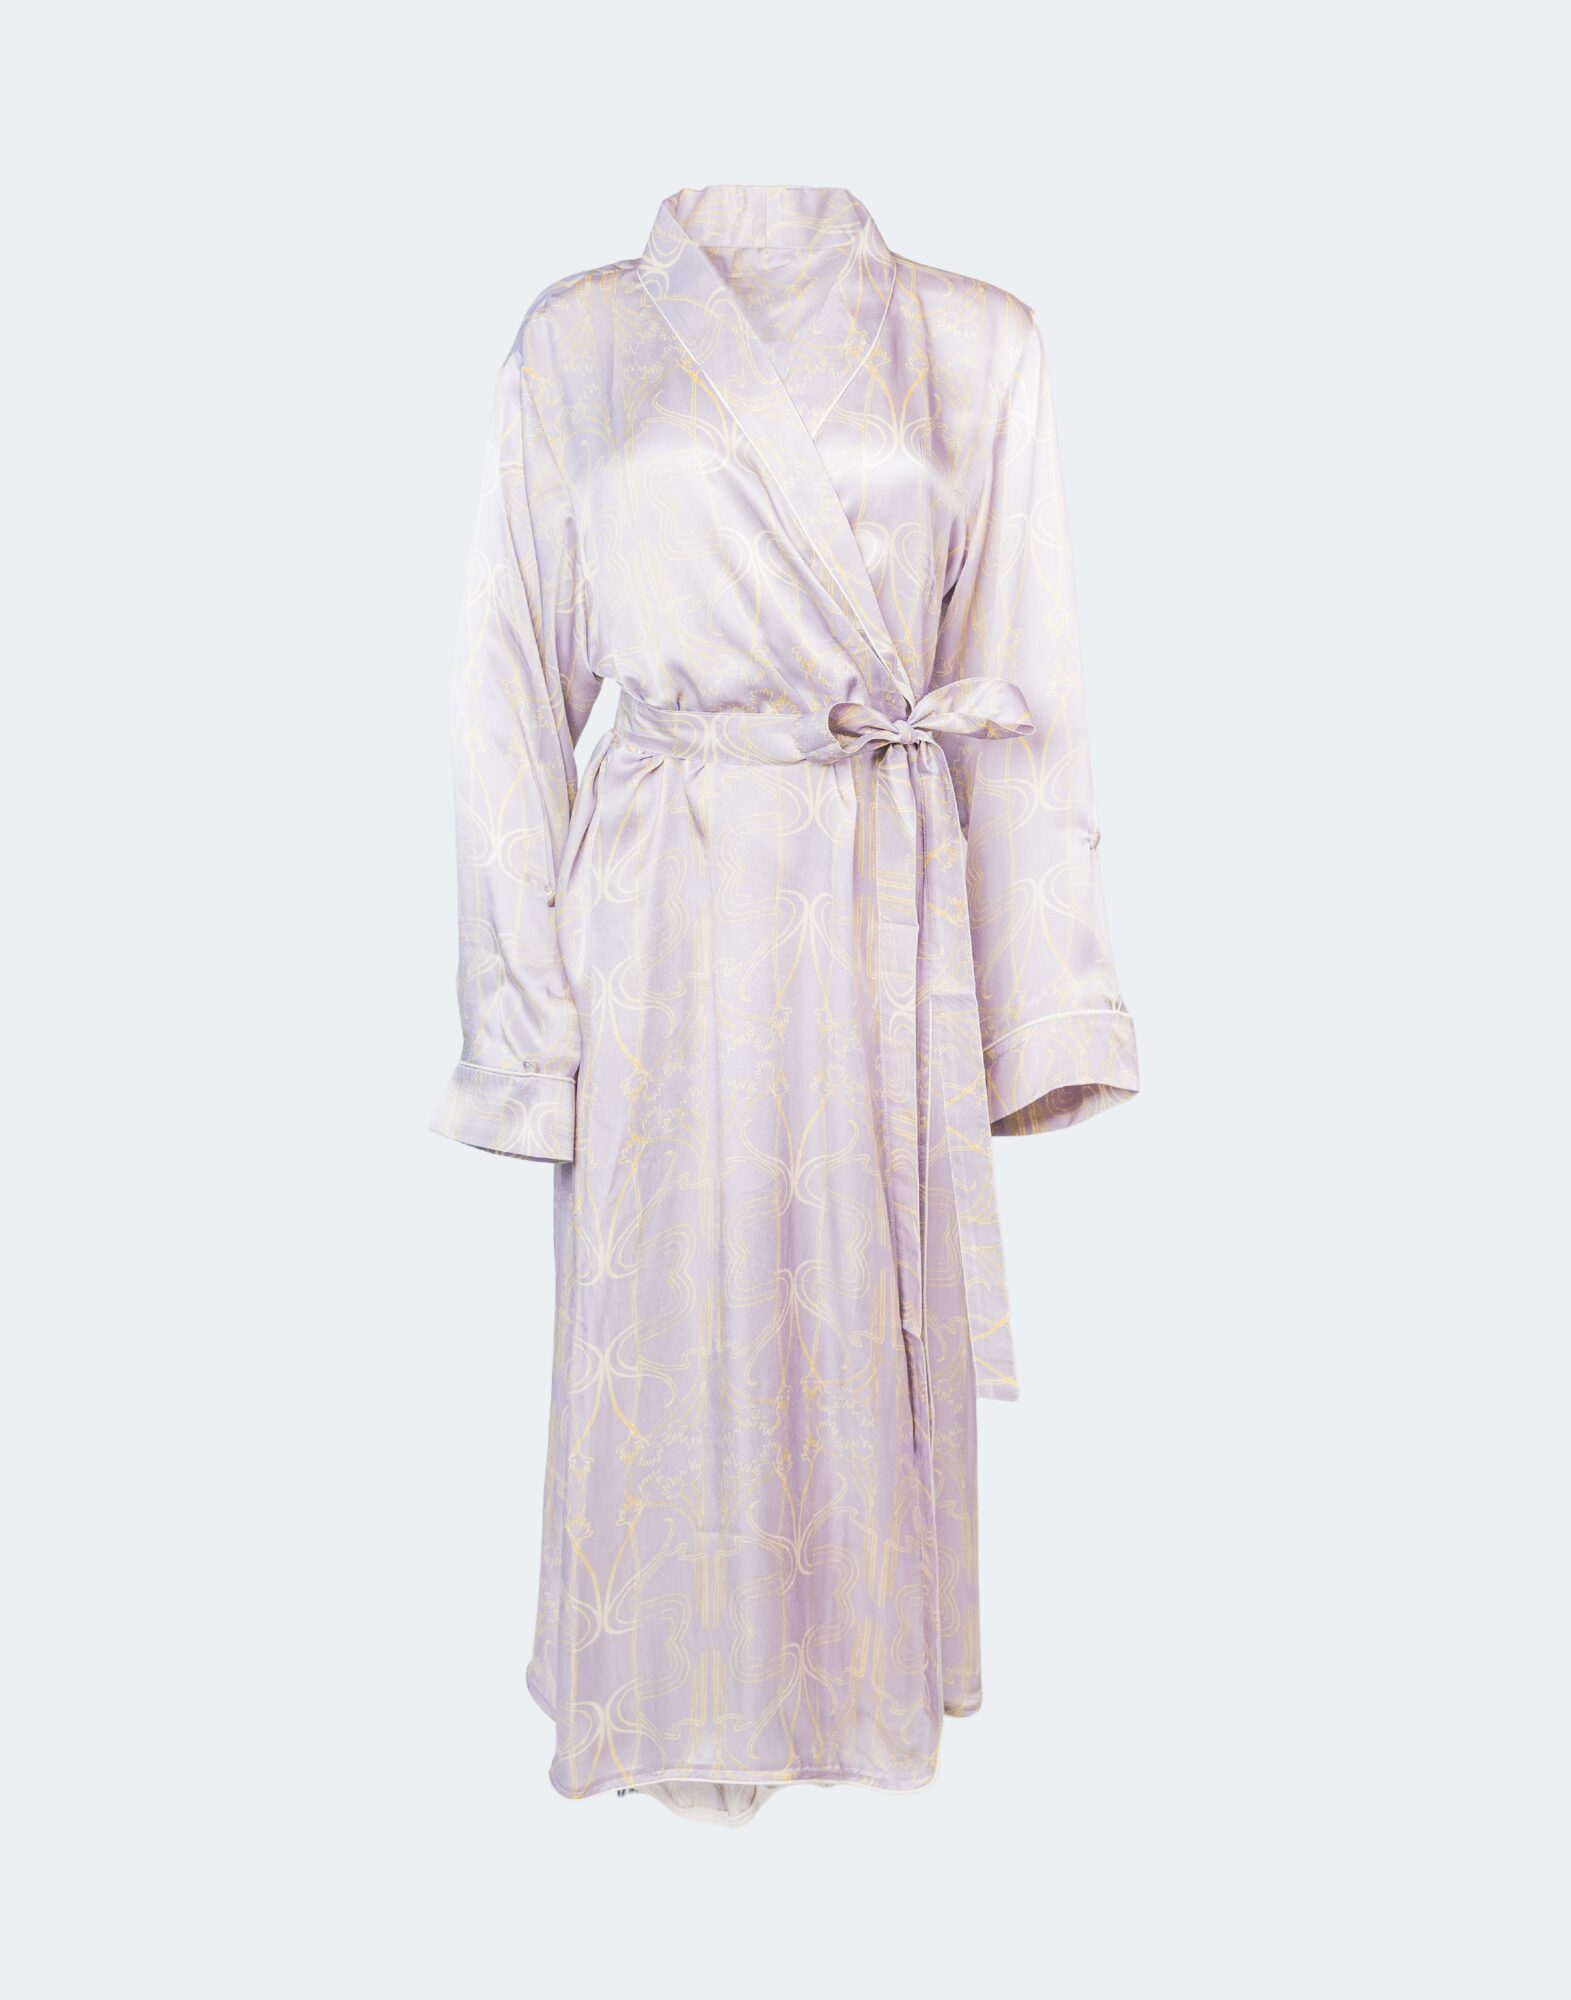 very pale silvery lavender robe in art nouveau robe